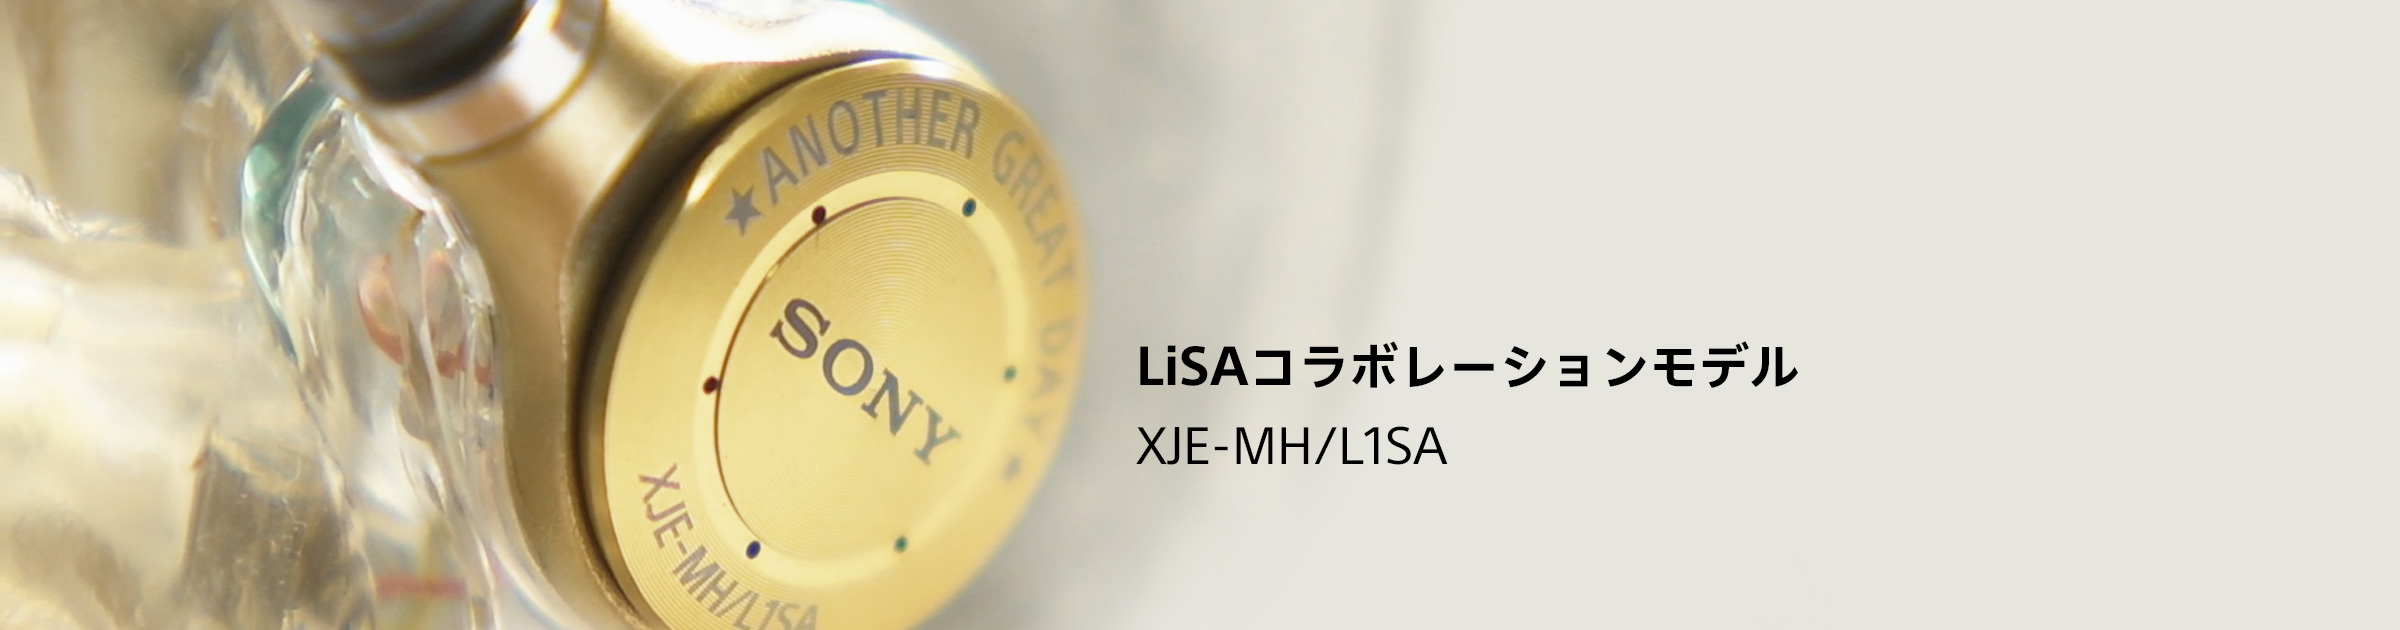 LiSAコラボレーションモデル XJE-MH/L1SA